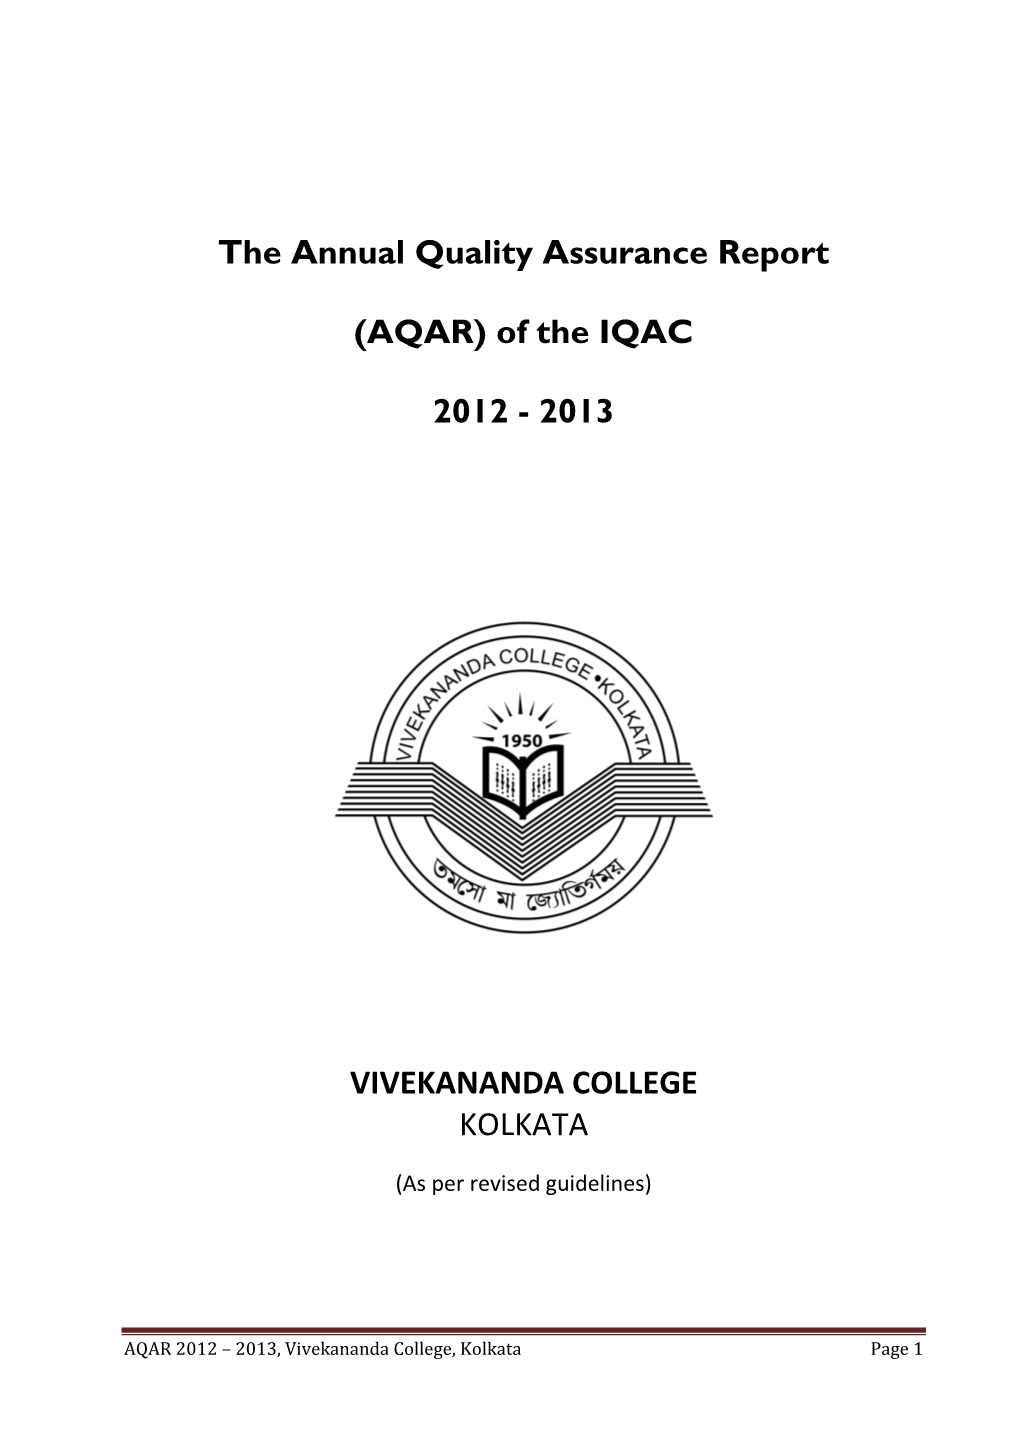 (AQAR) of the IQAC 2012